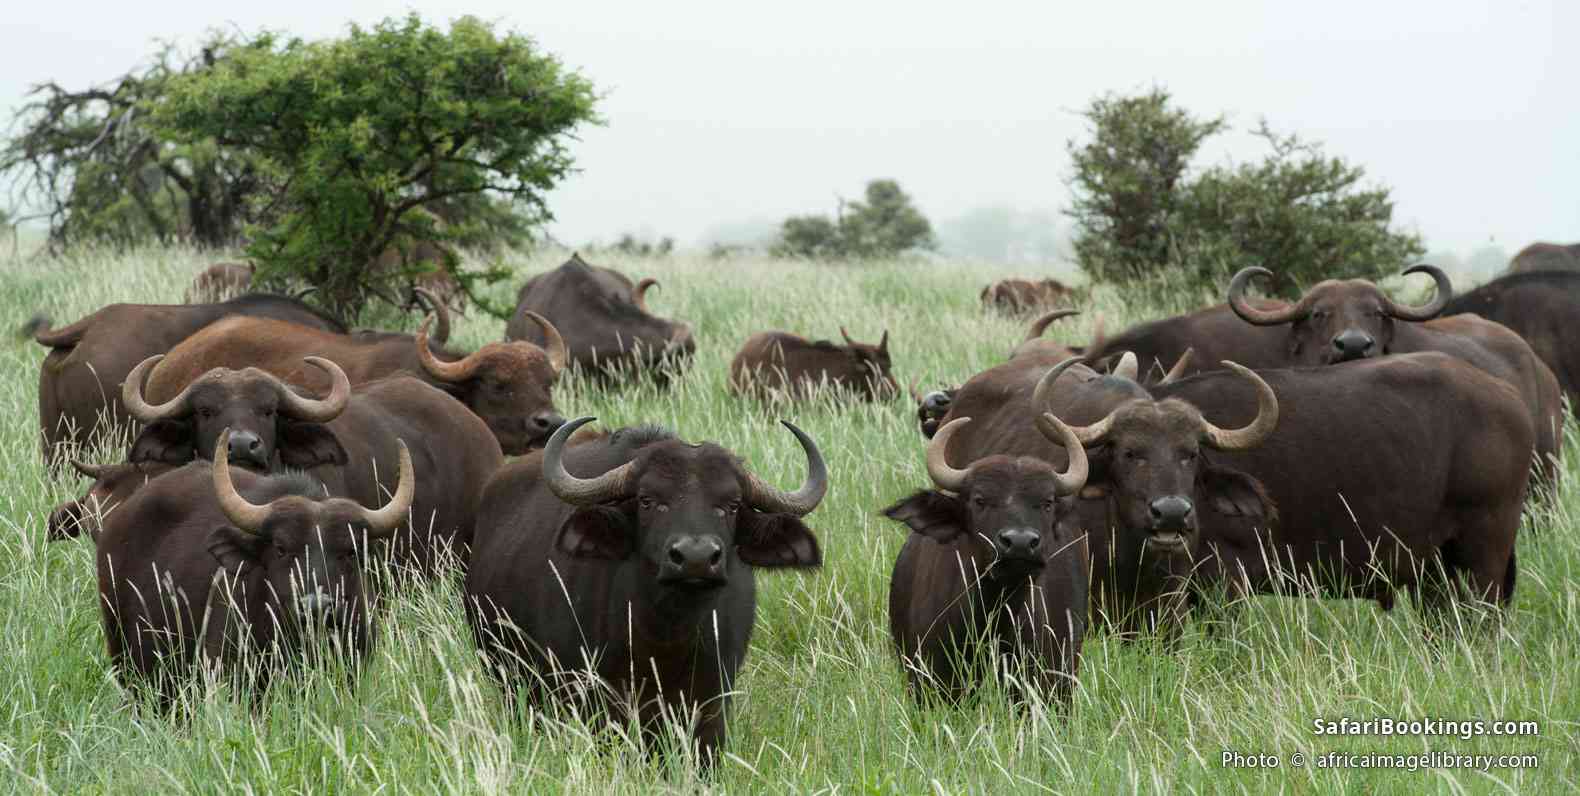 Buffalo on a grassy field in Lewa Wildlife Conservancy